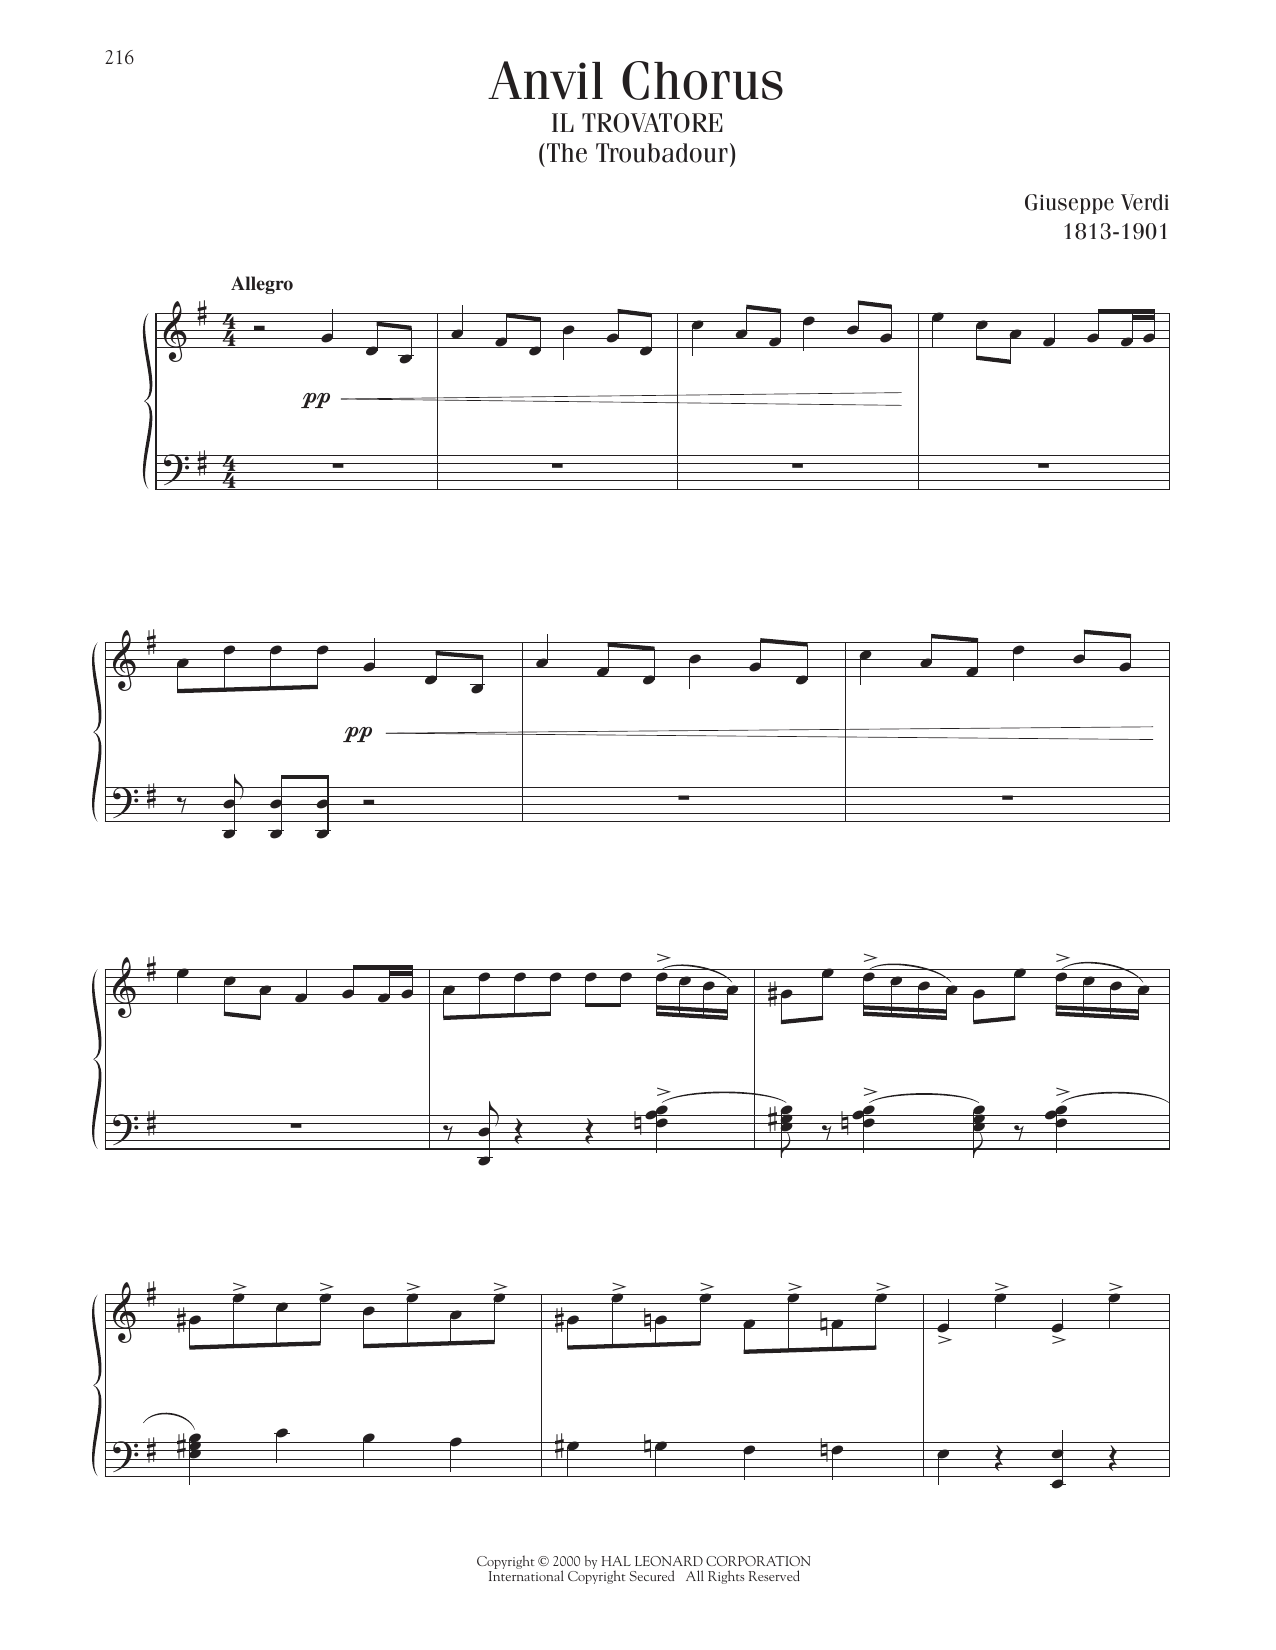 Giuseppe Verdi Anvil Chorus sheet music notes printable PDF score